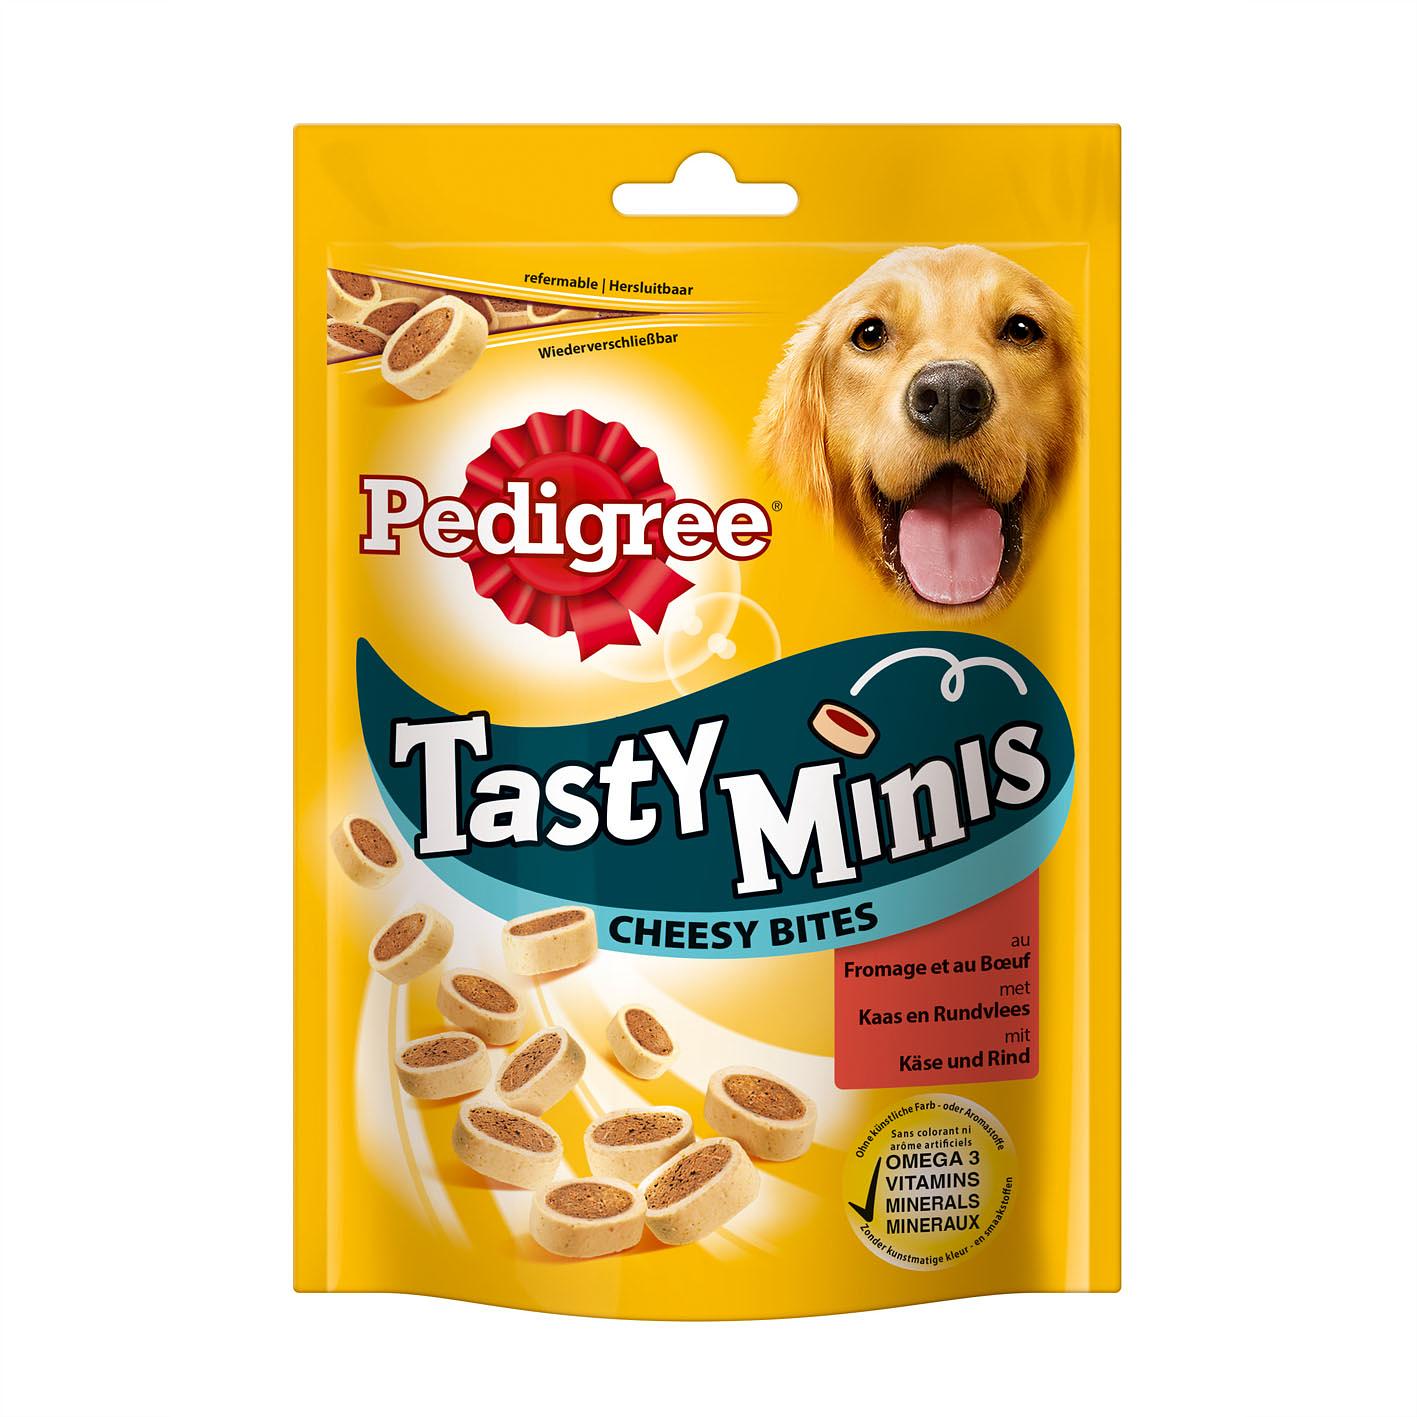 Pedigree Tasty Minis